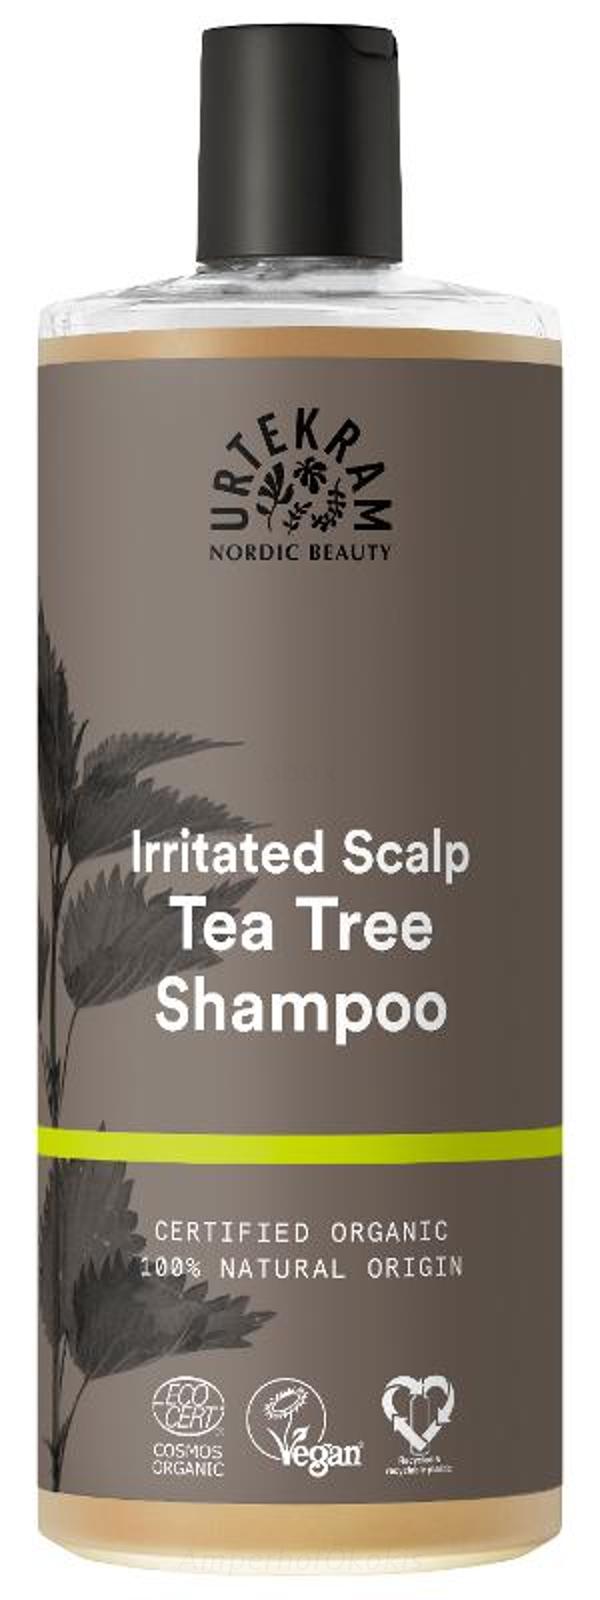 Produktfoto zu Shampoo Tea Tree 500 g